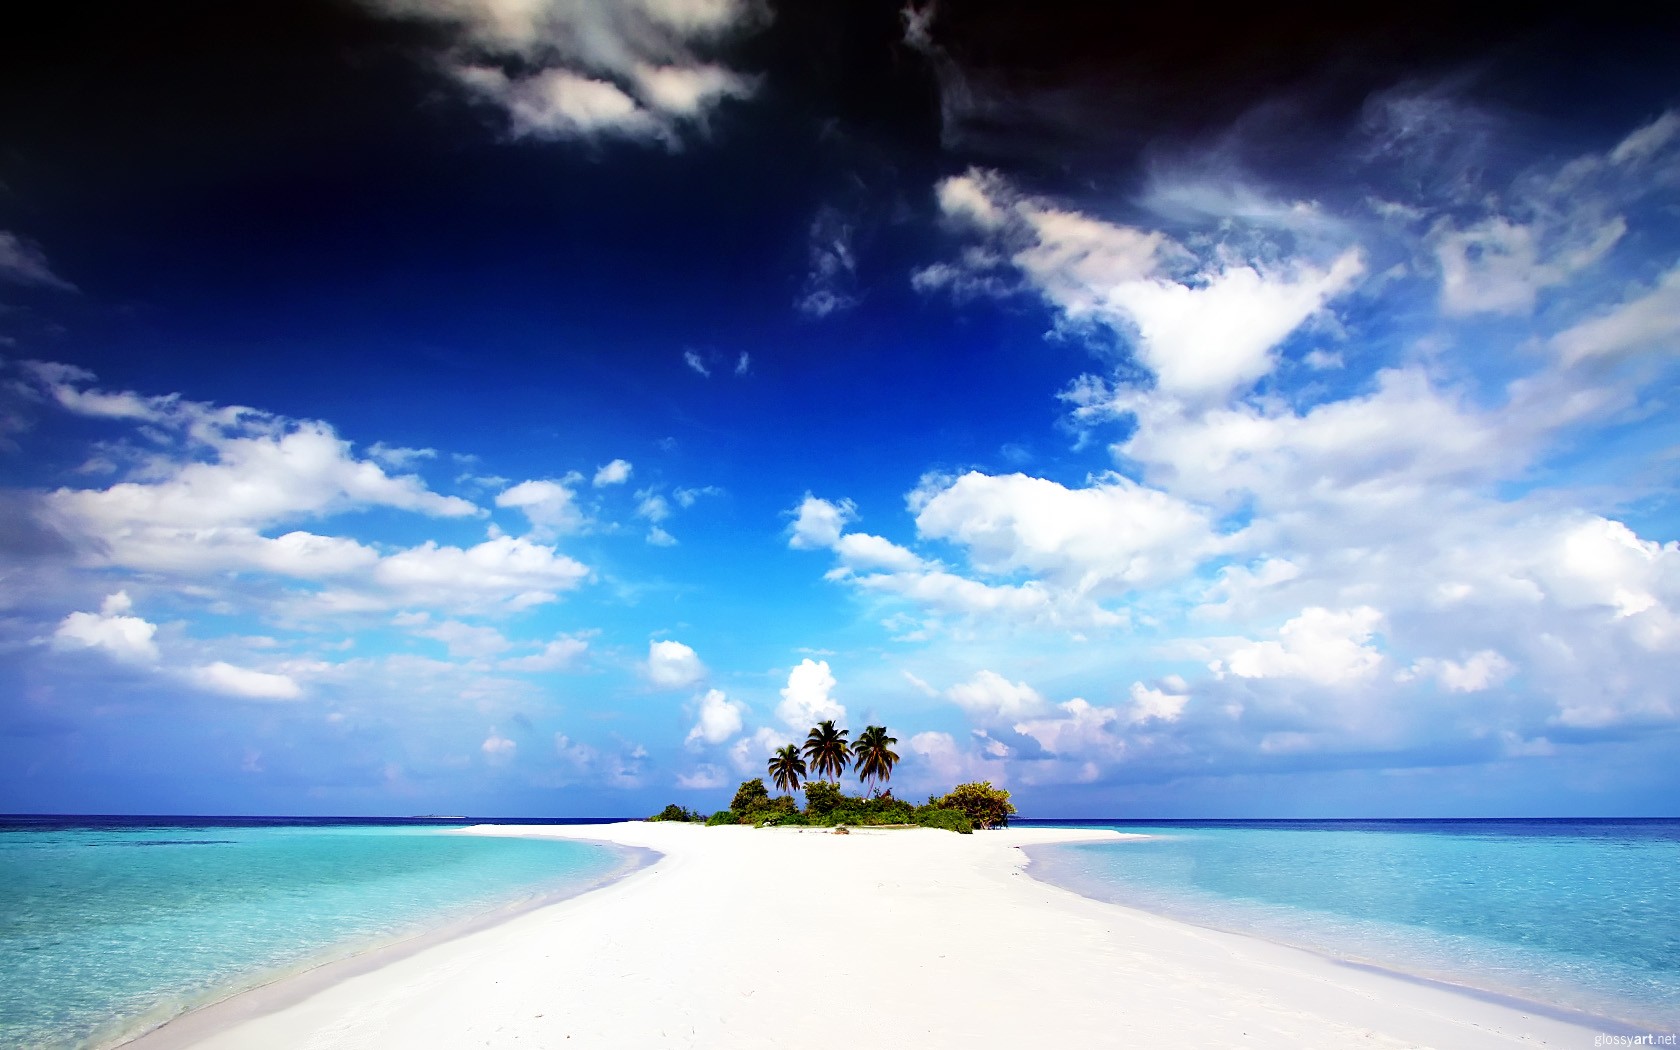 General 1680x1050 clouds island palm trees water sand tropical tropic island nature sky sea